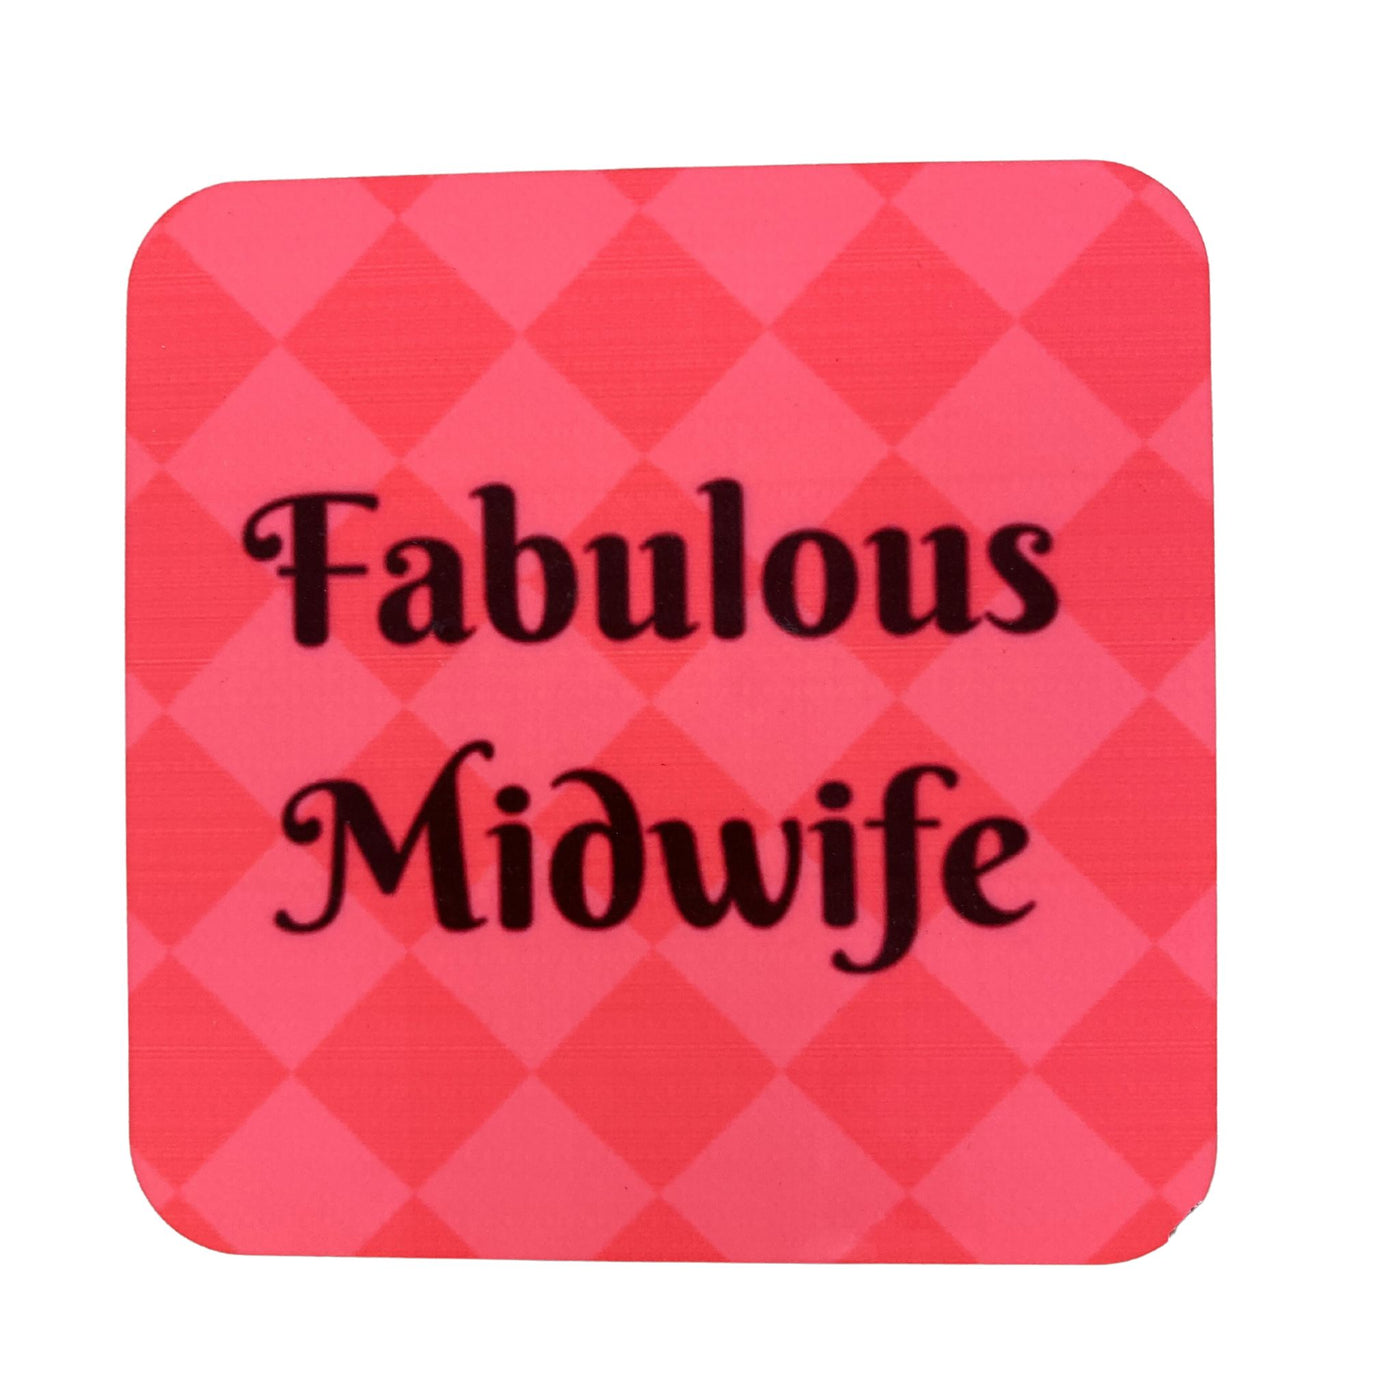 CLEARANCE - Fabulous Midwife Coaster